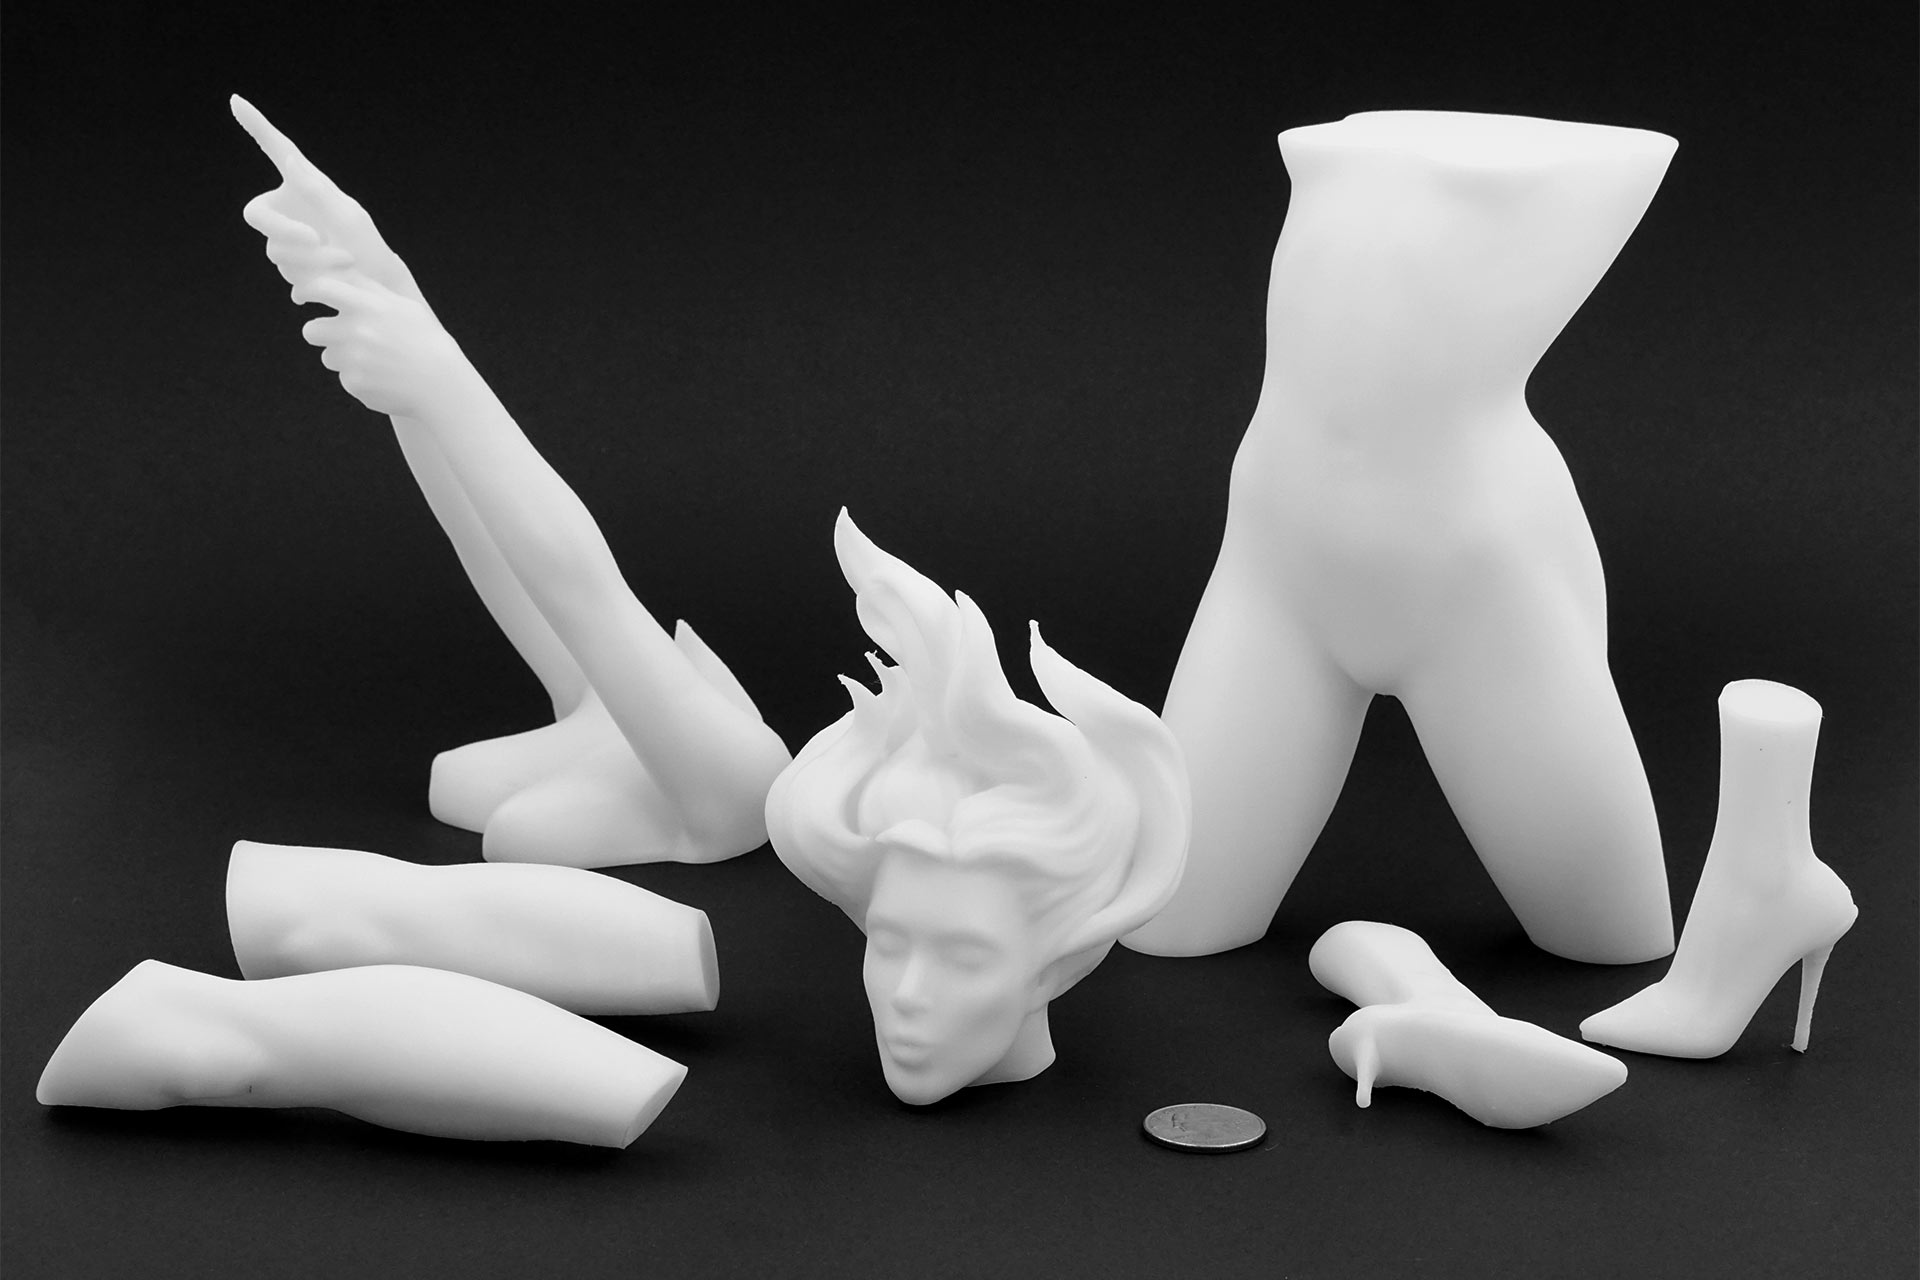 A 3D printed female figure